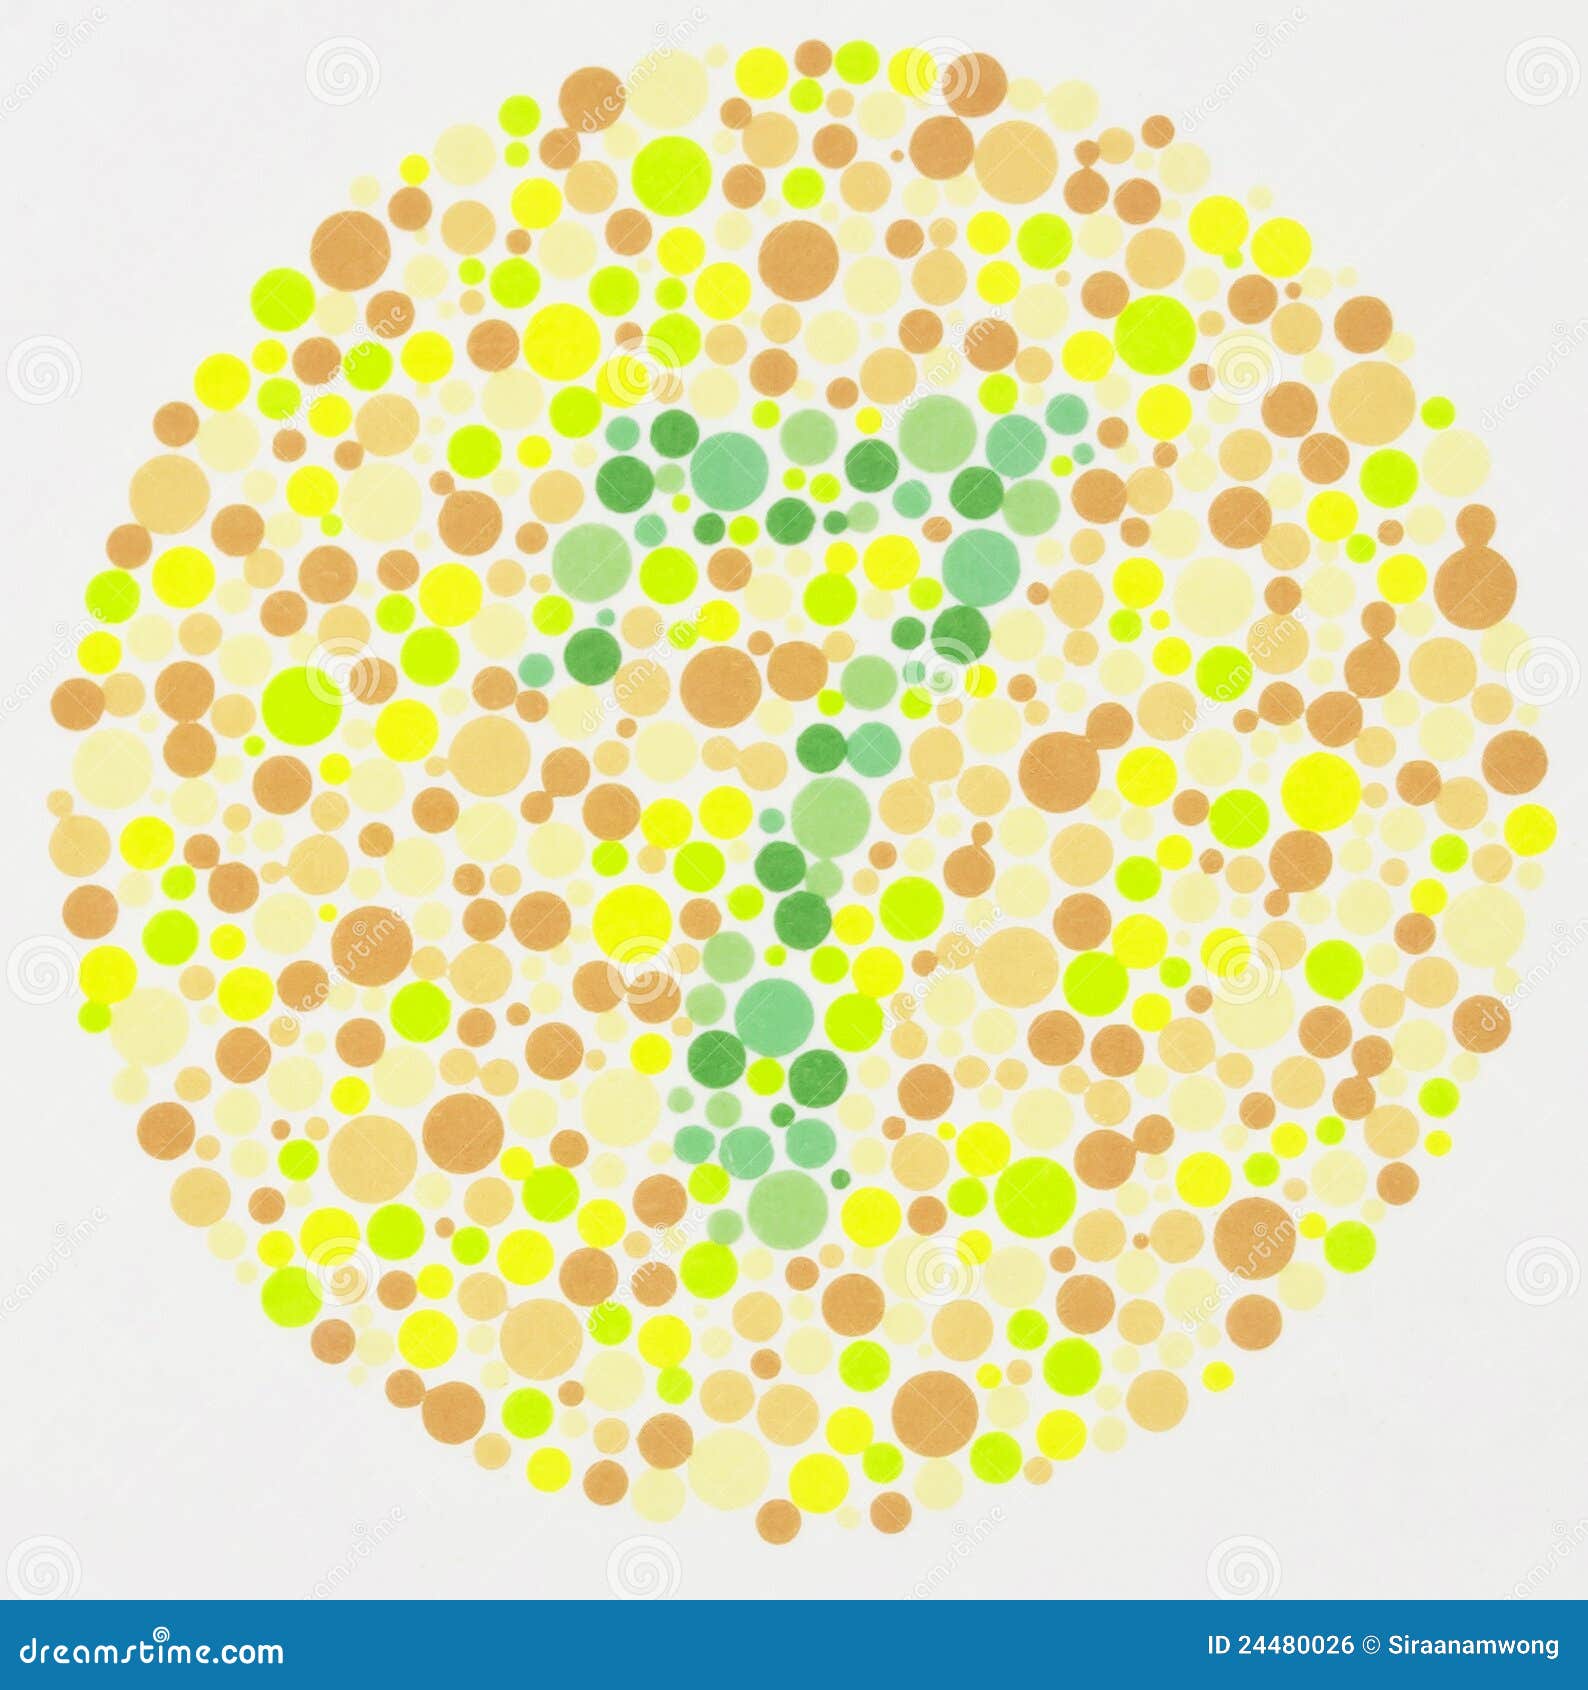 Colour Vision Chart Download